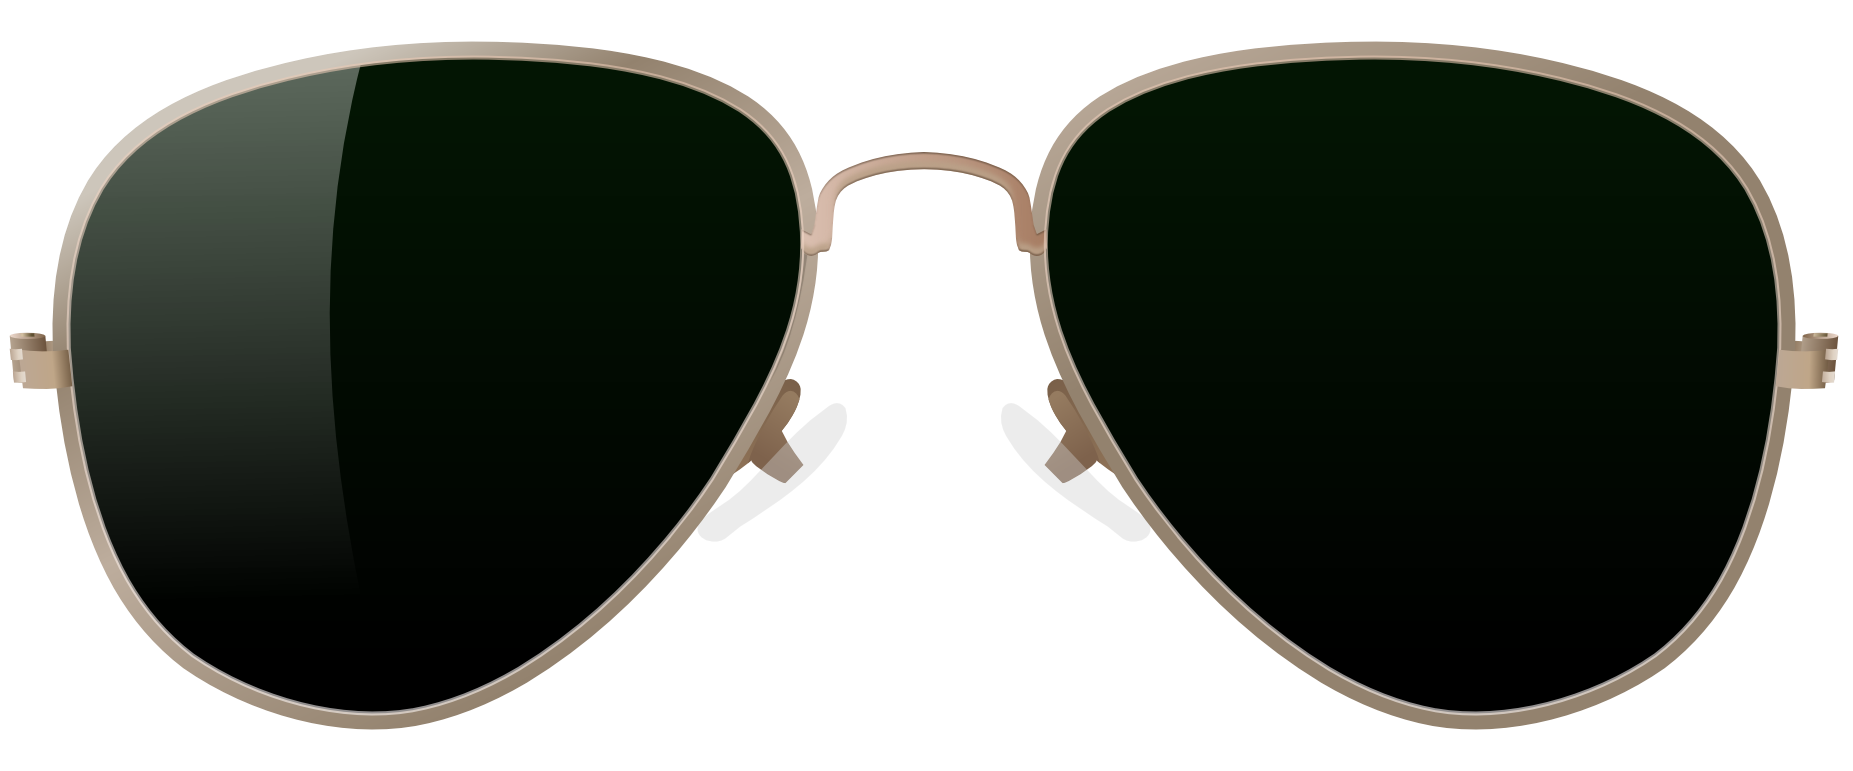 Transparent Sunglasses Ray Ban - kycdesigns